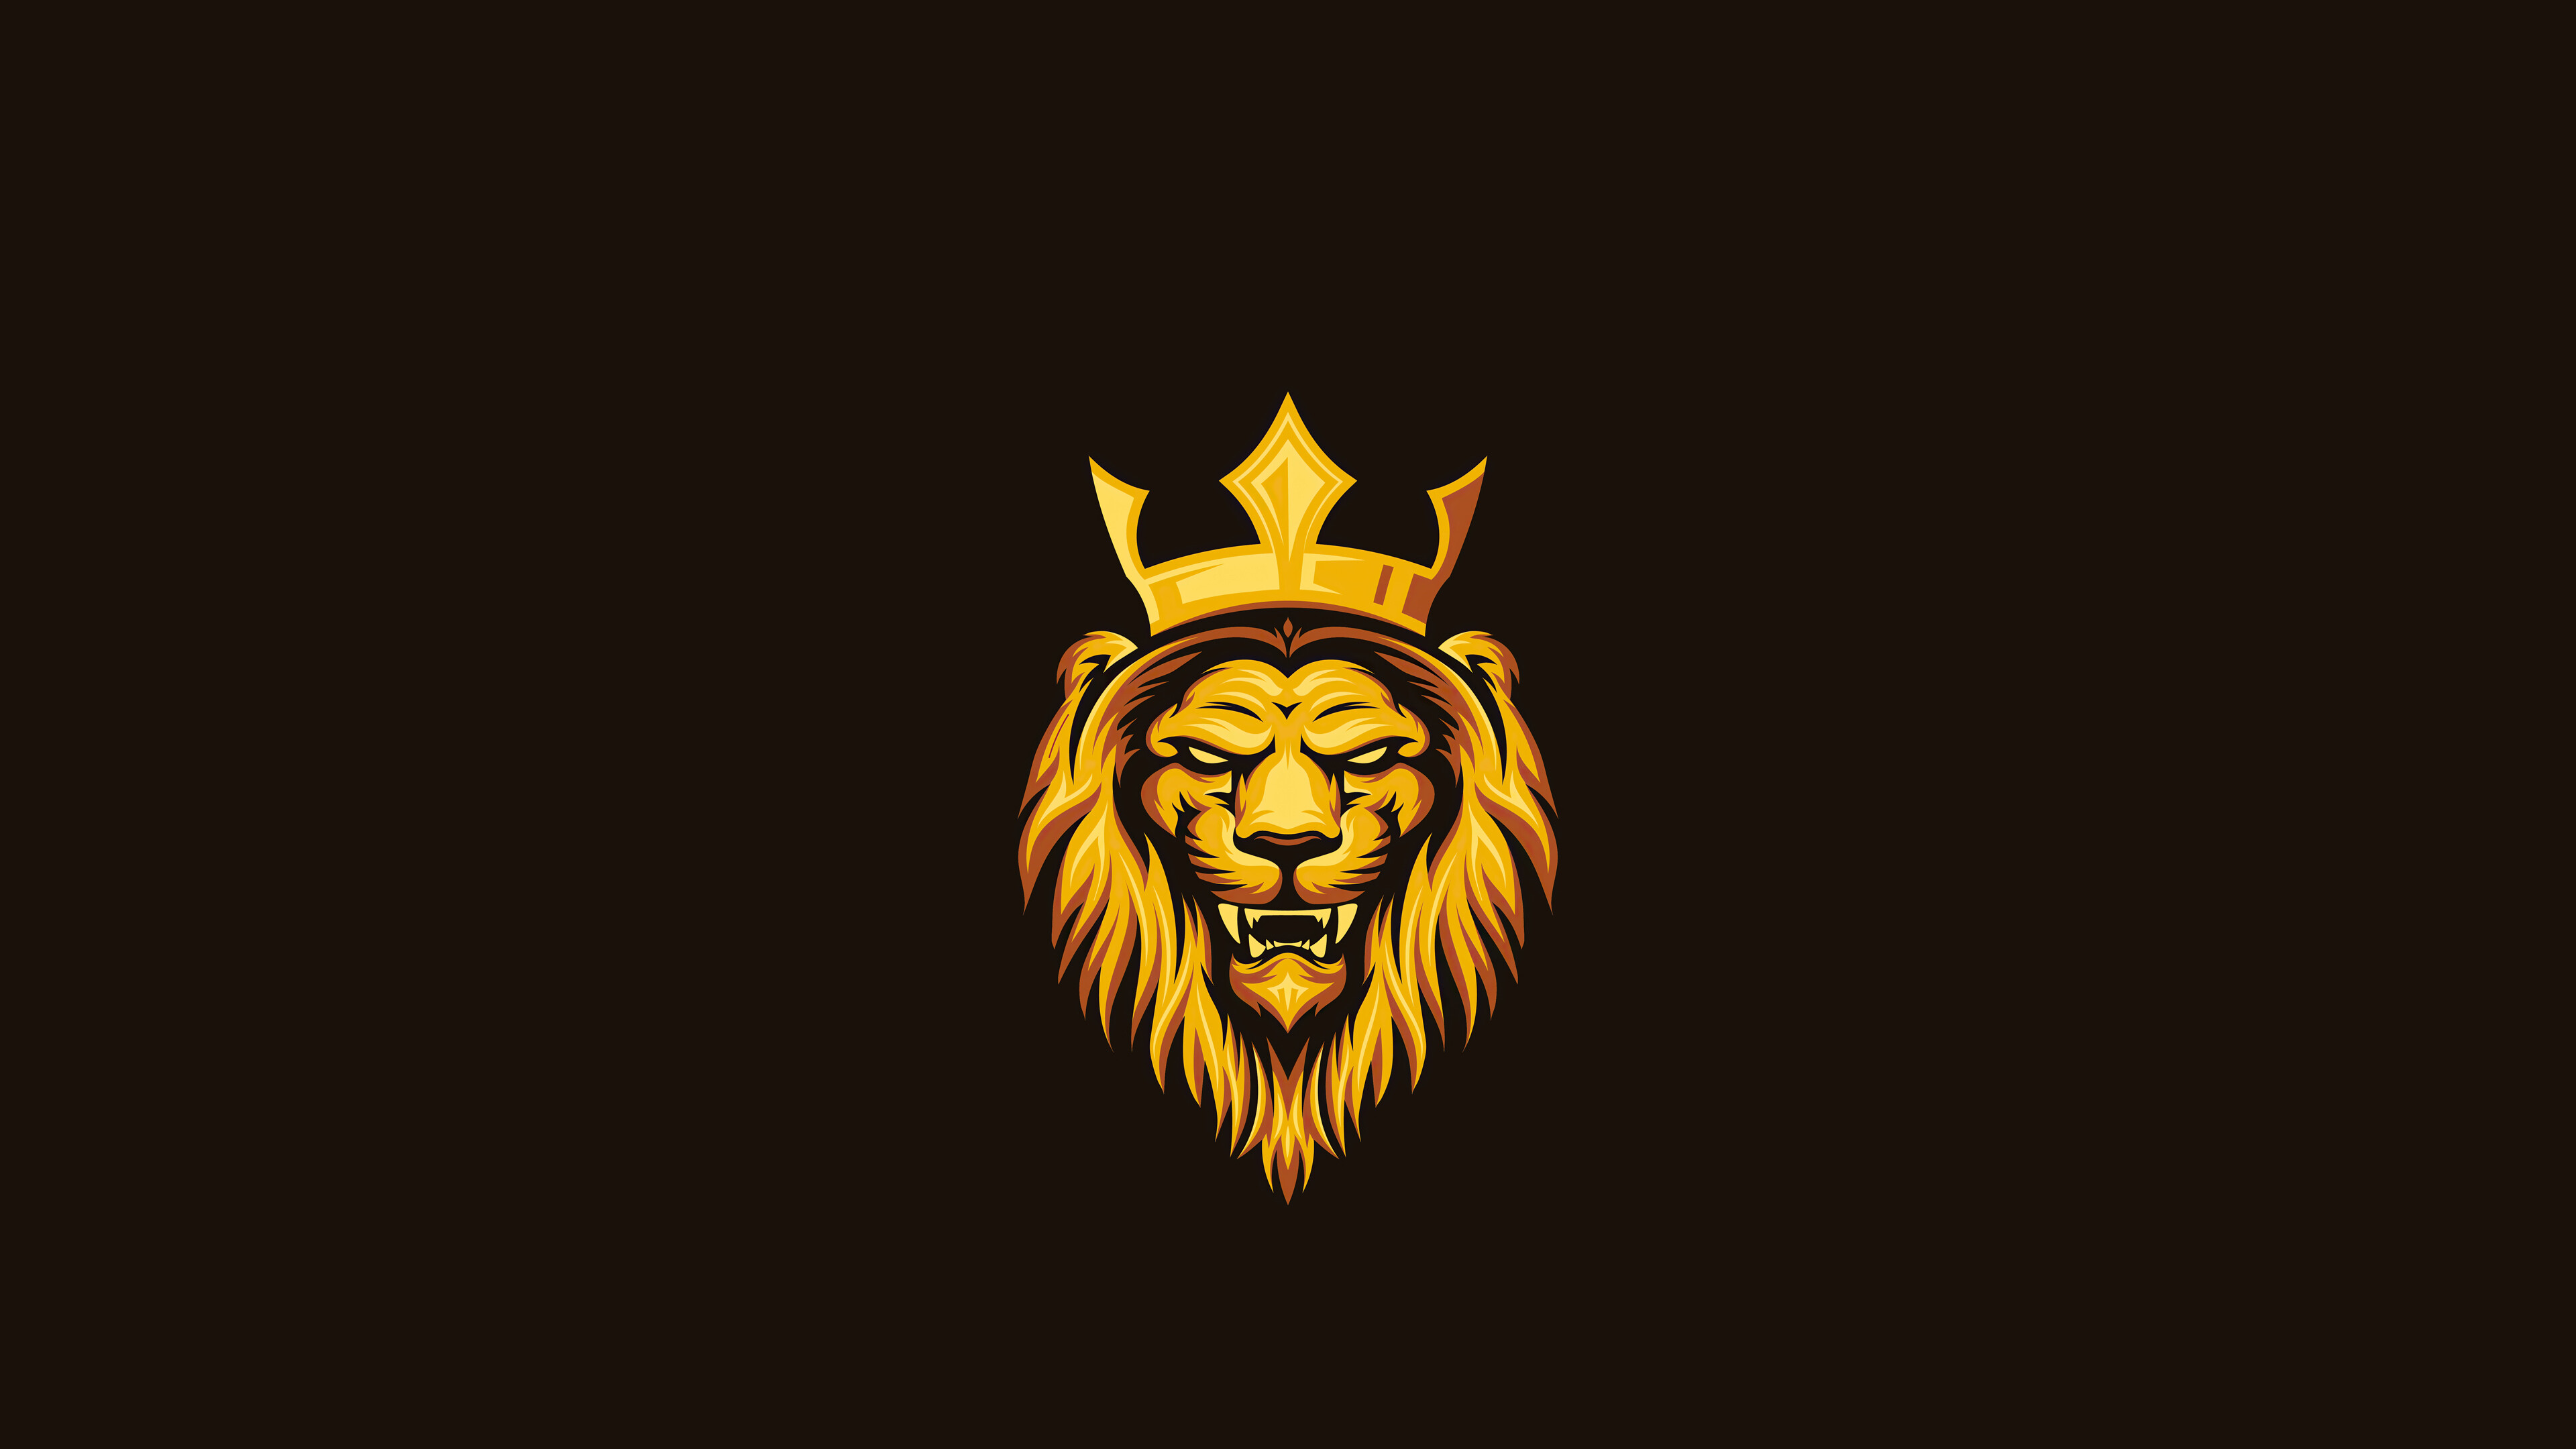 King, Minimalistic lion king, High definition art, 1440p resolution, 3840x2160 4K Desktop